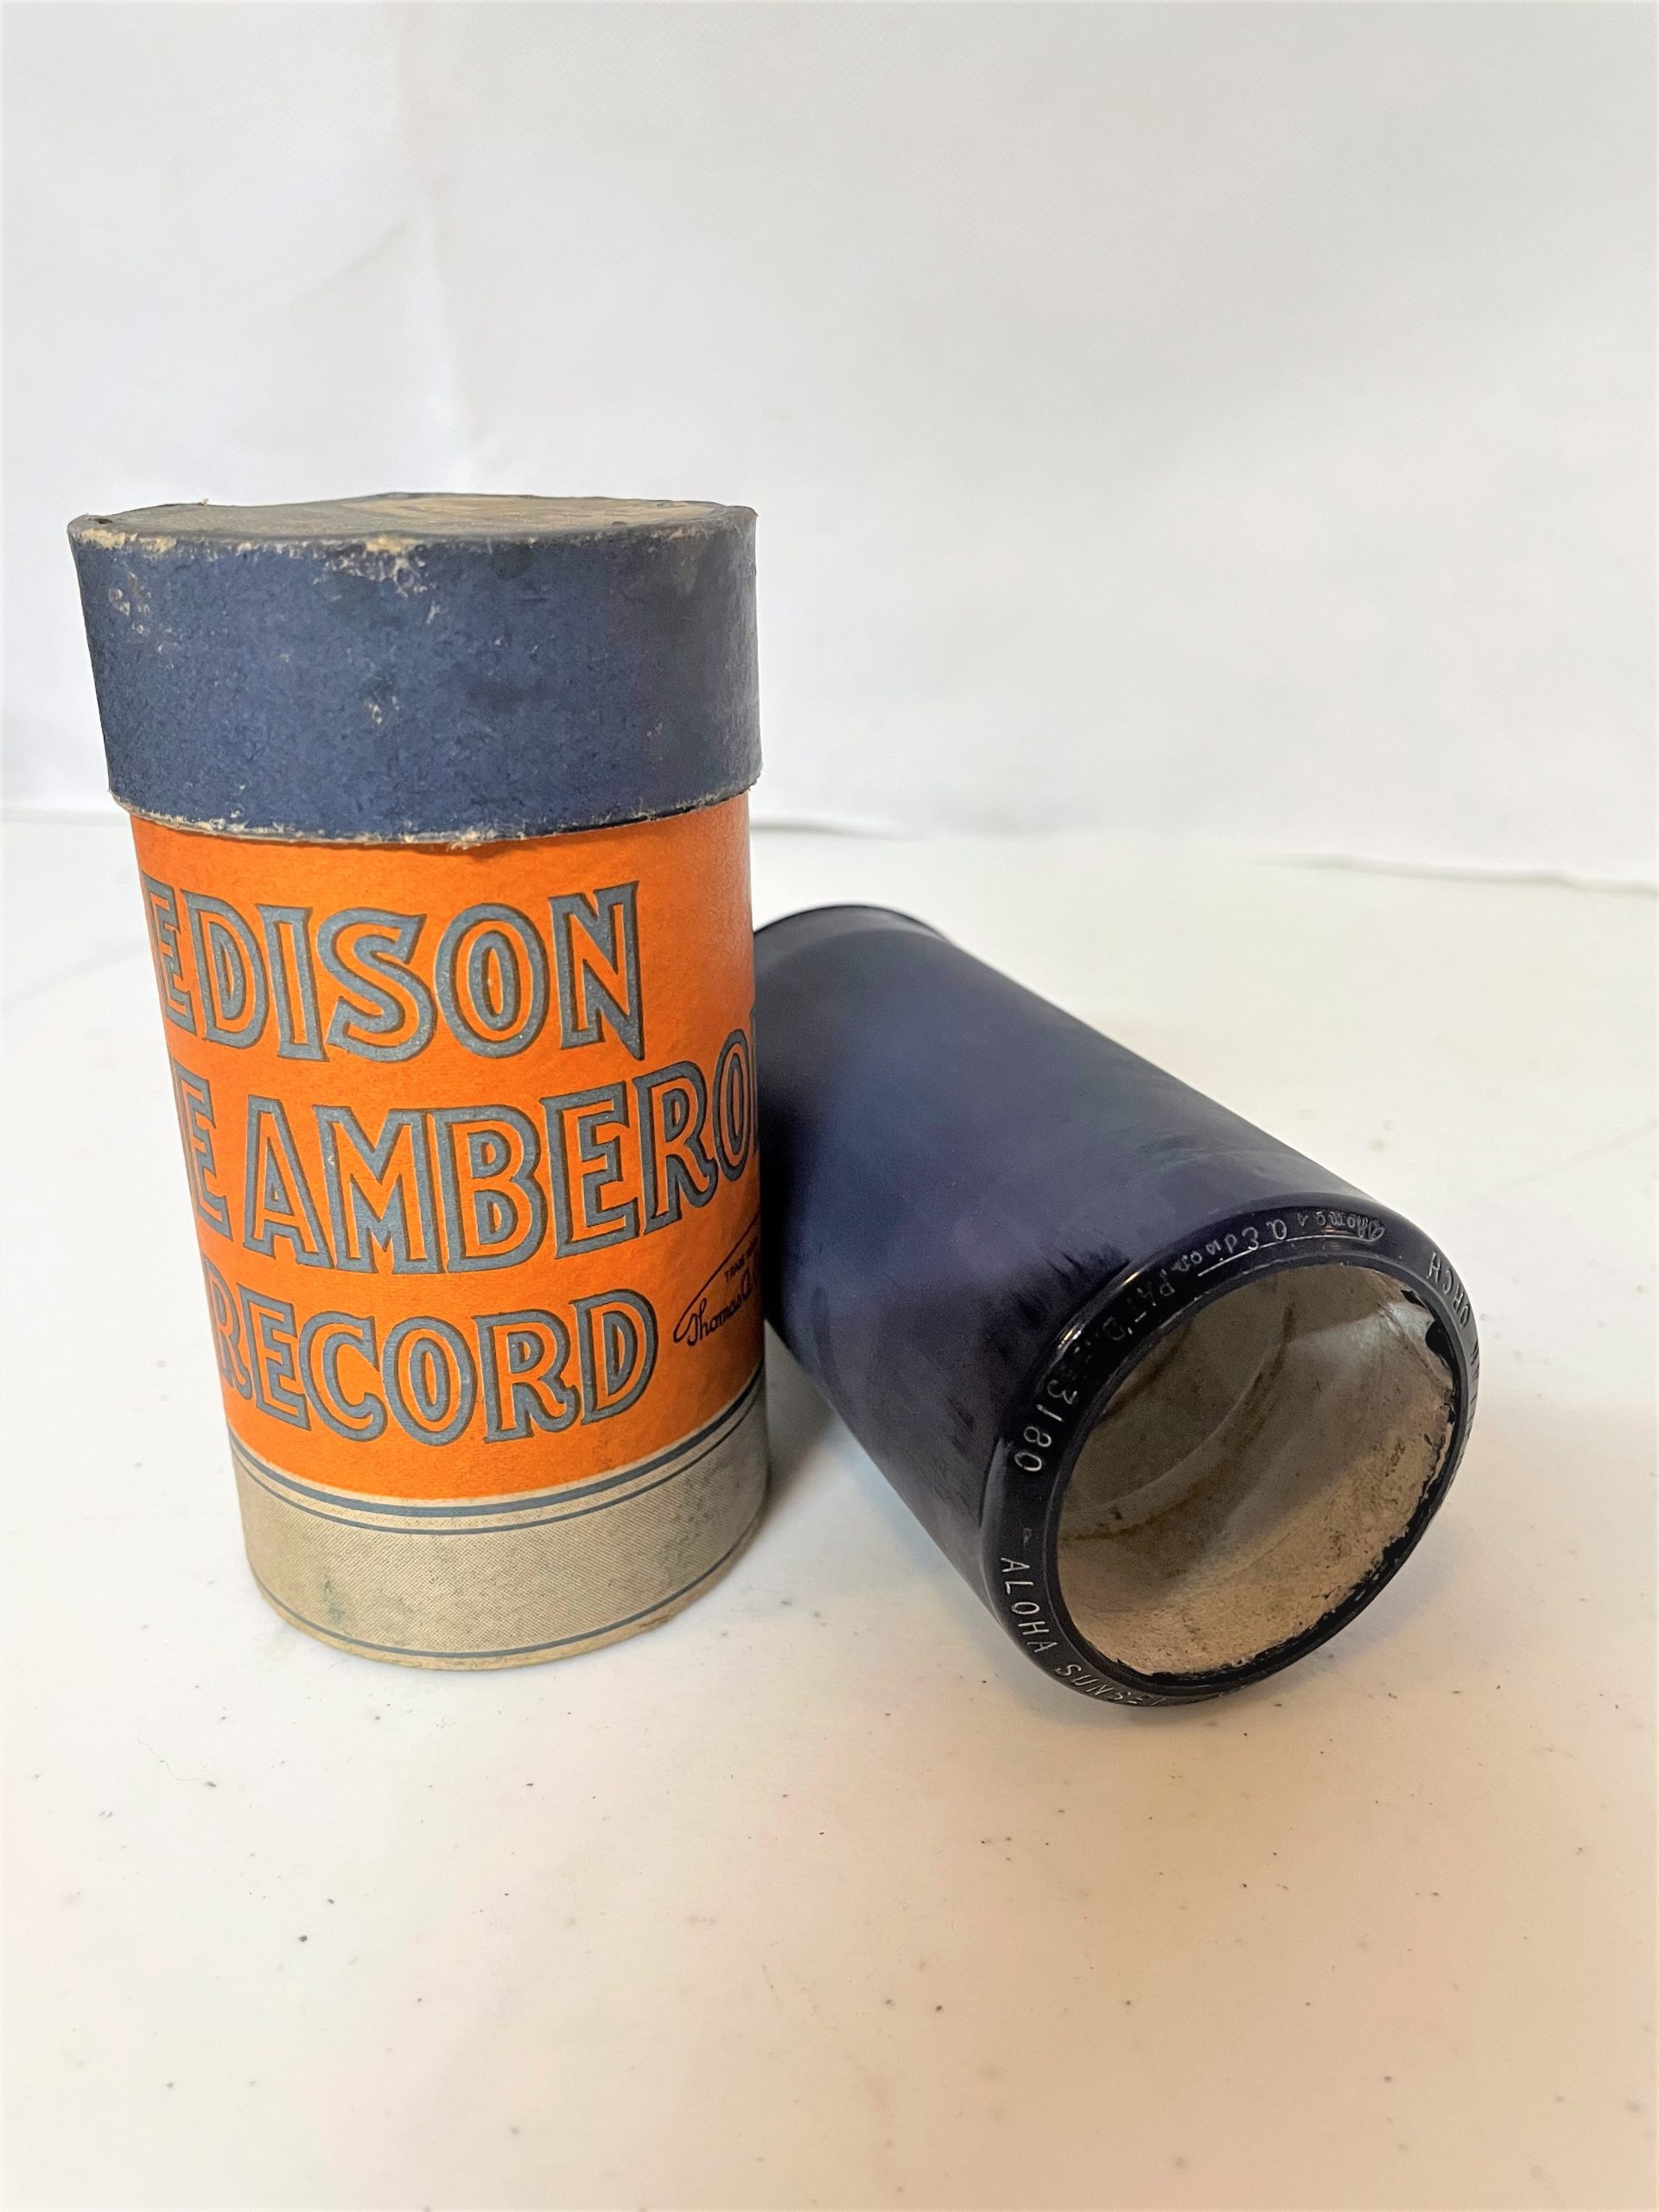 Edison 4 minute cylinder… “Virginia Reel”